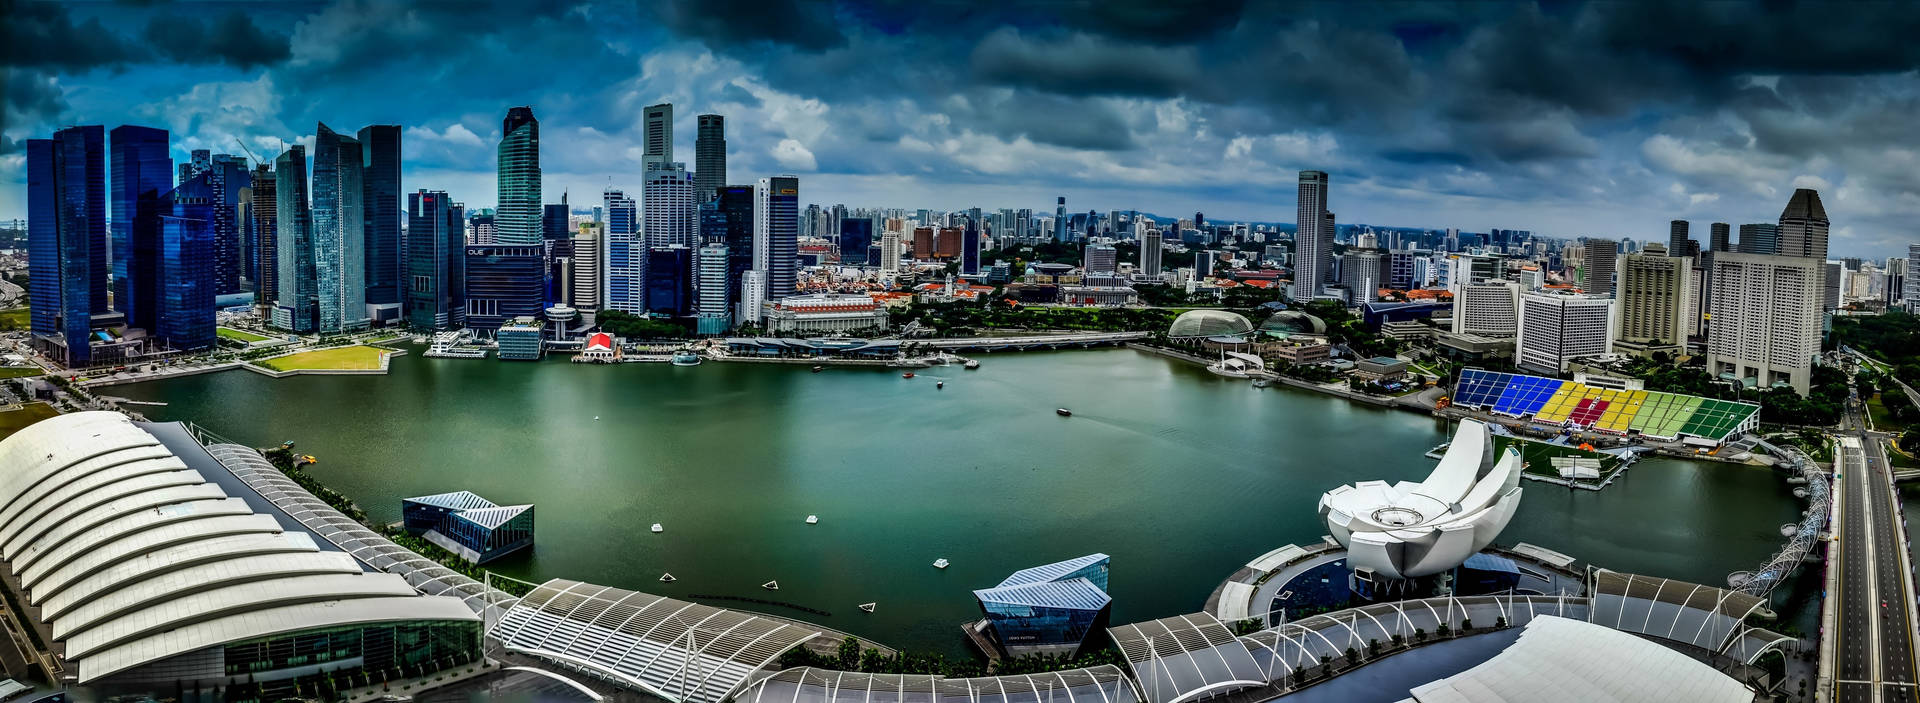 Marina Bay Sands Singapore Harbour Wallpaper